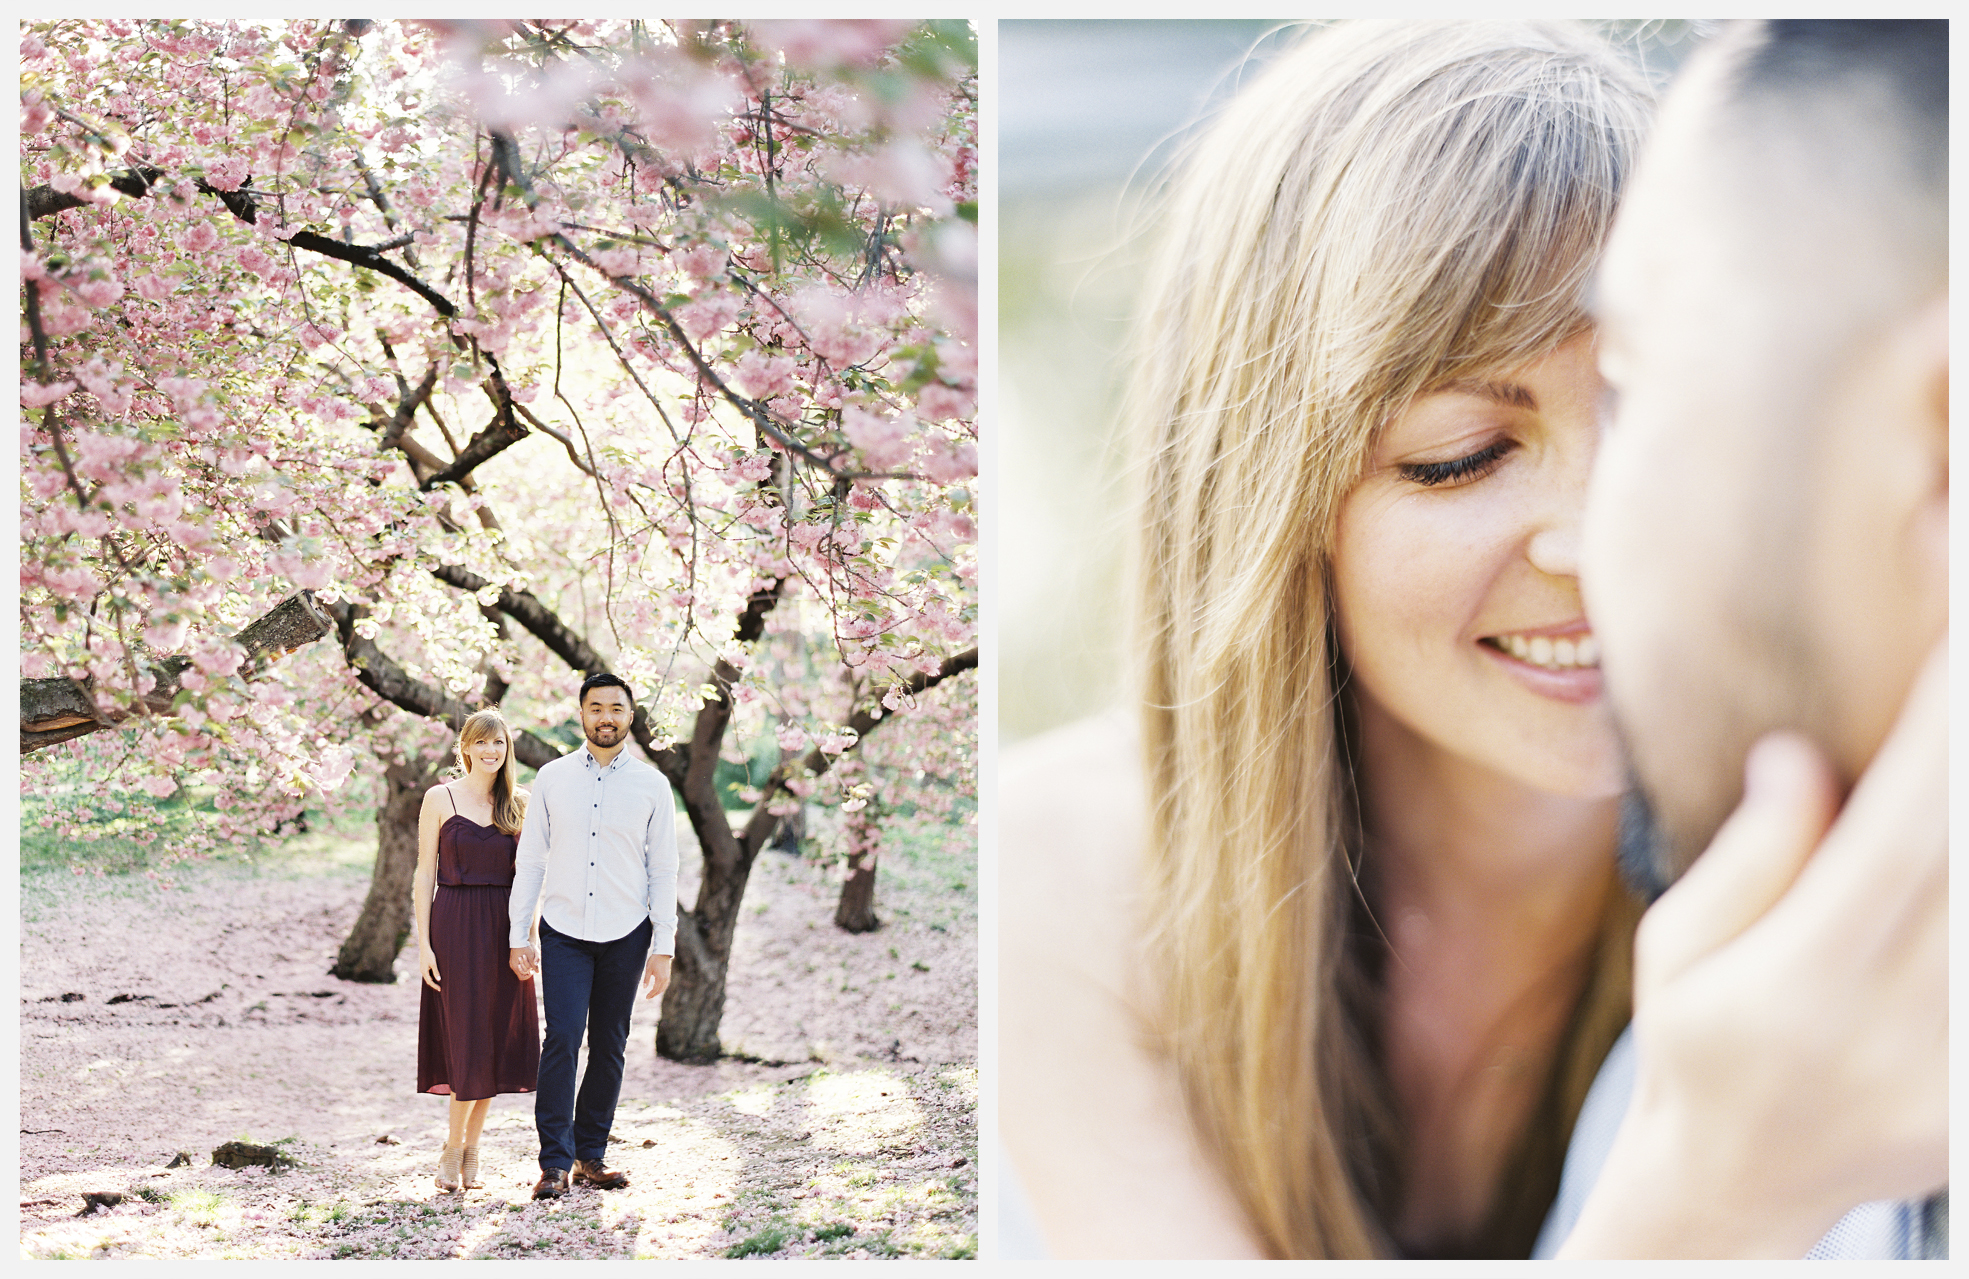 Central Park cherry tree blossom engagement photos by wedding photographer Alicia Swedenborg